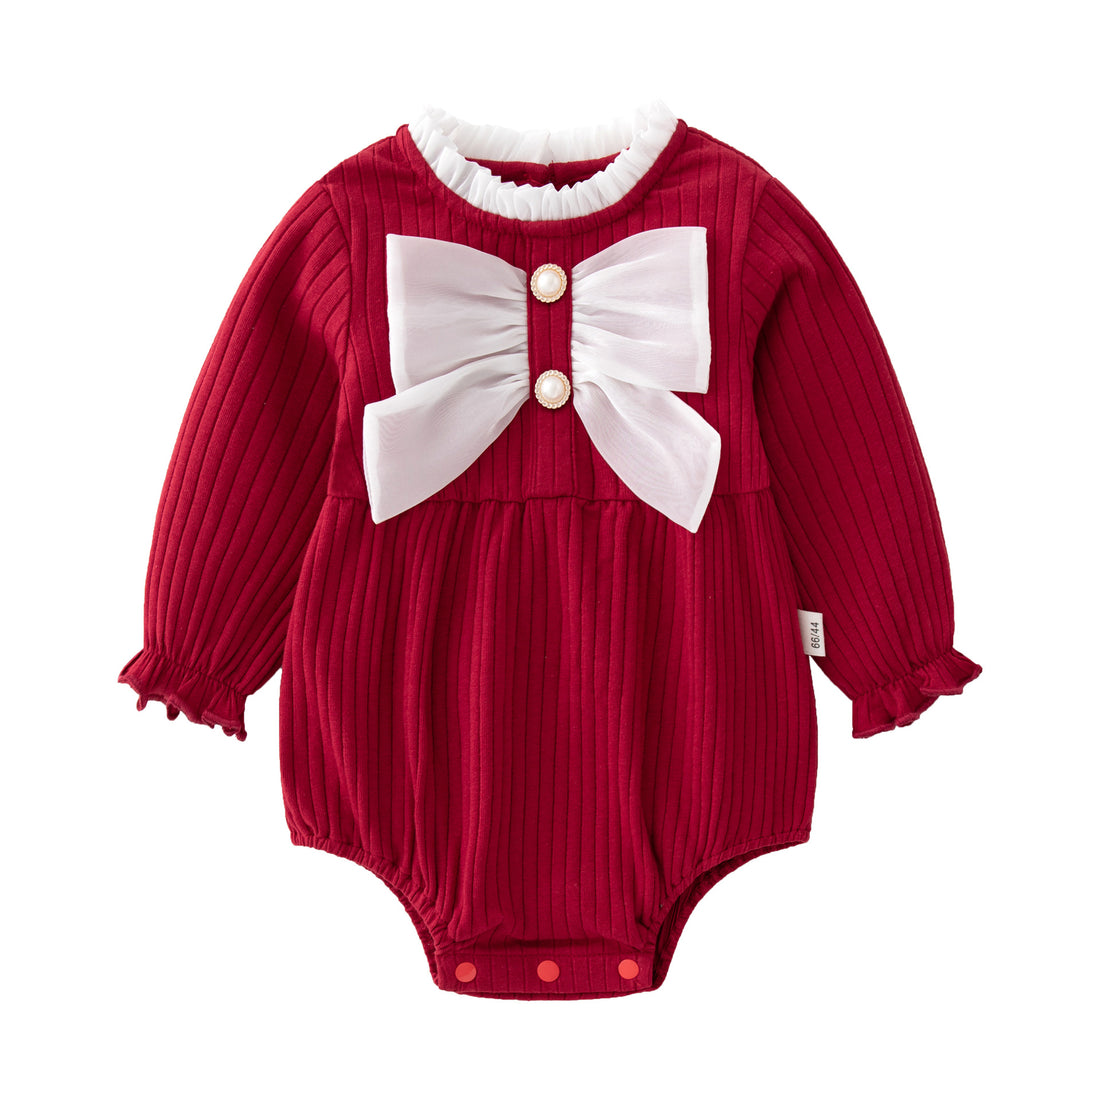 Avezano Newborn Onesie Sweet Super Cute Baby Bag Fart Coat Outfits